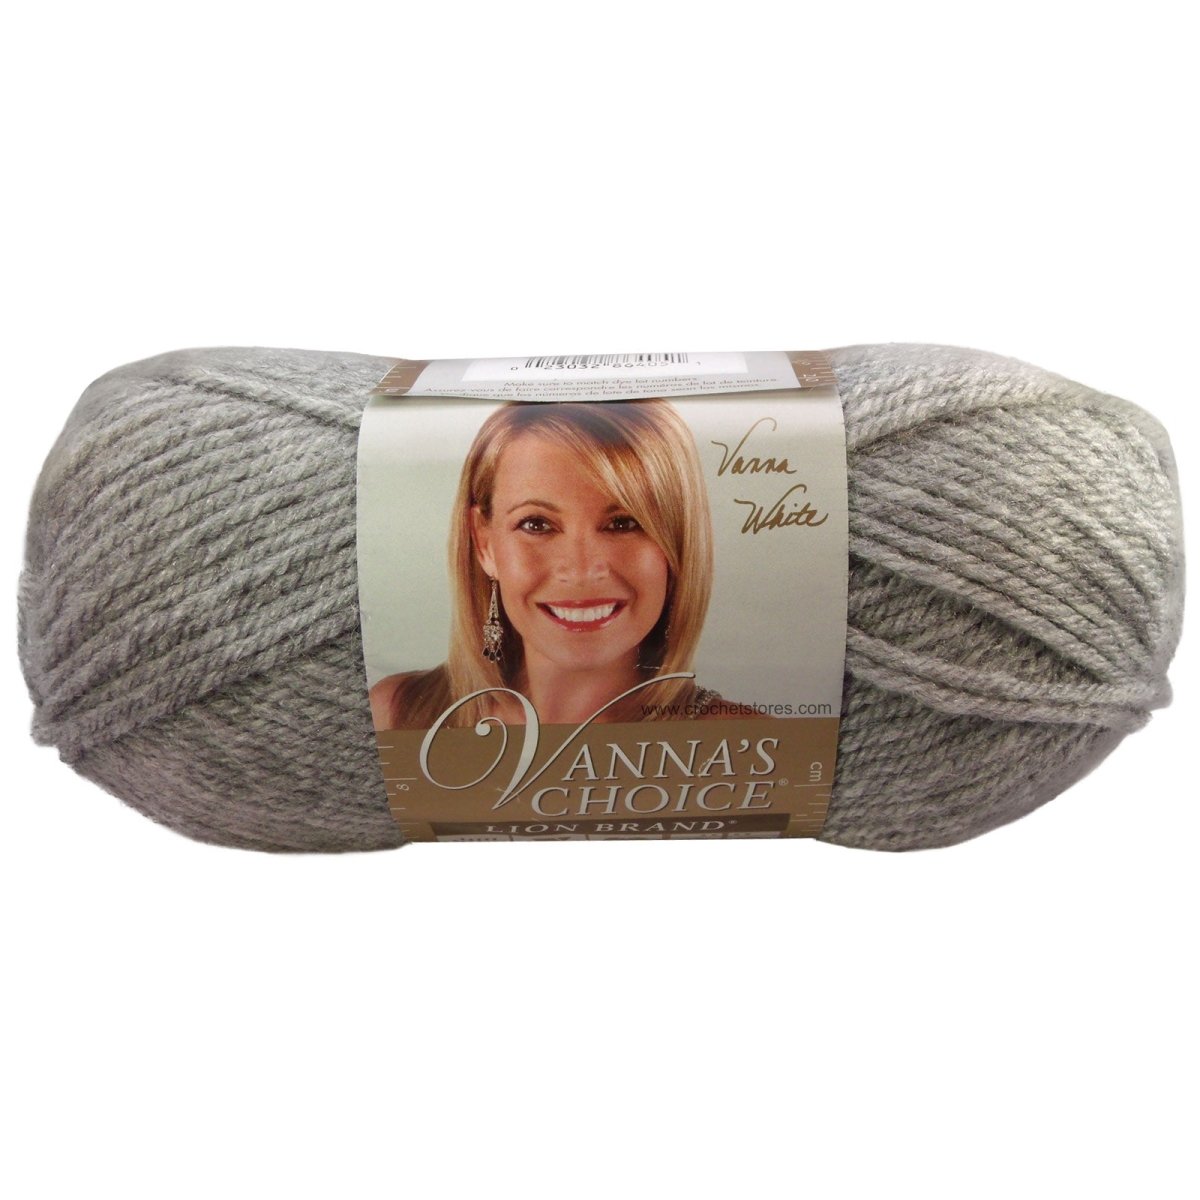 VANNAS CHOICE - Crochetstores860-405